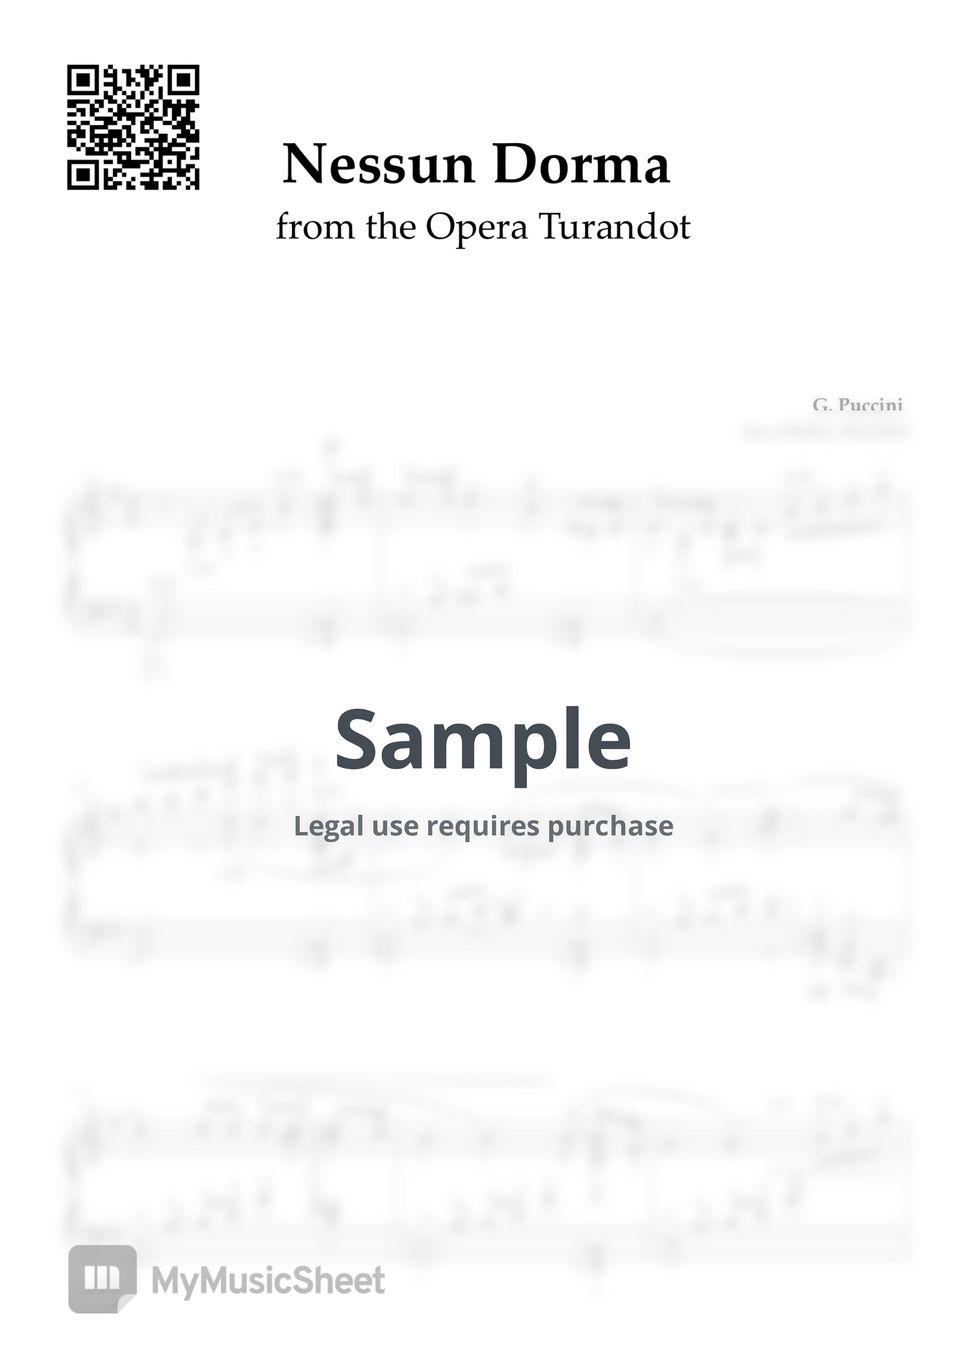 G. Puccini (from the Opera Turandot) - Nessun Dorma by DOLL PIANO